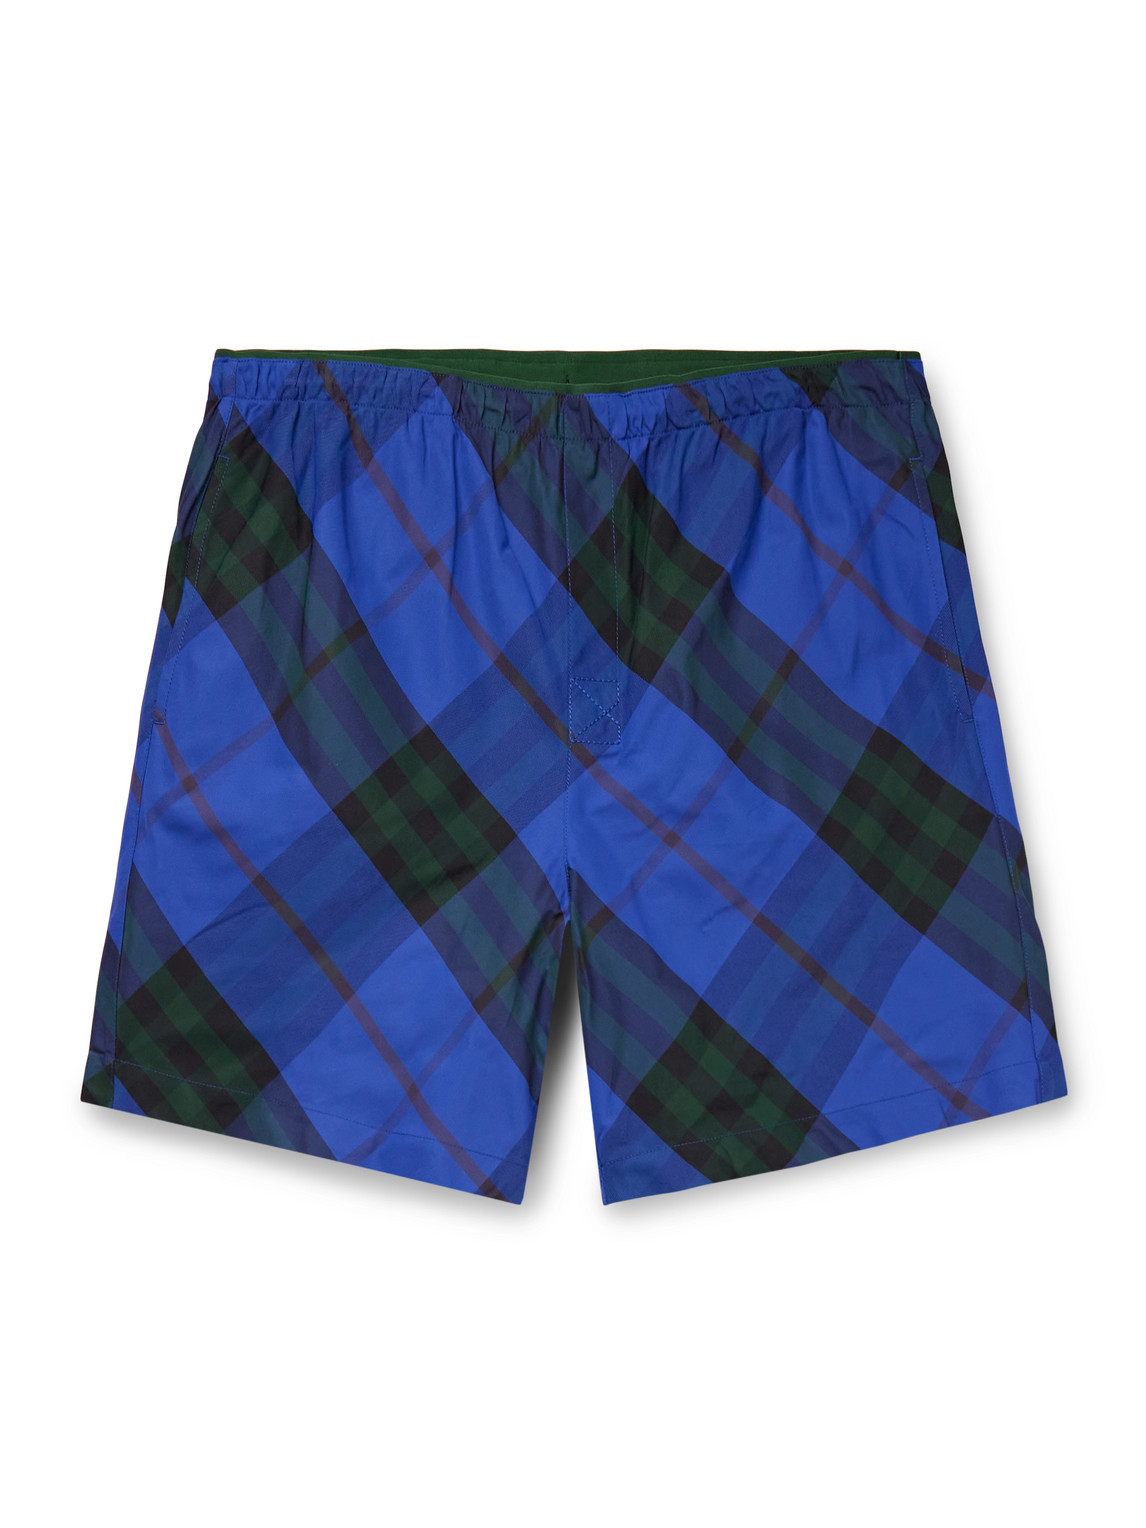 Burberry - Straight-Leg Mid-Length Checked Swim Shorts - Men - Blue - L von Burberry